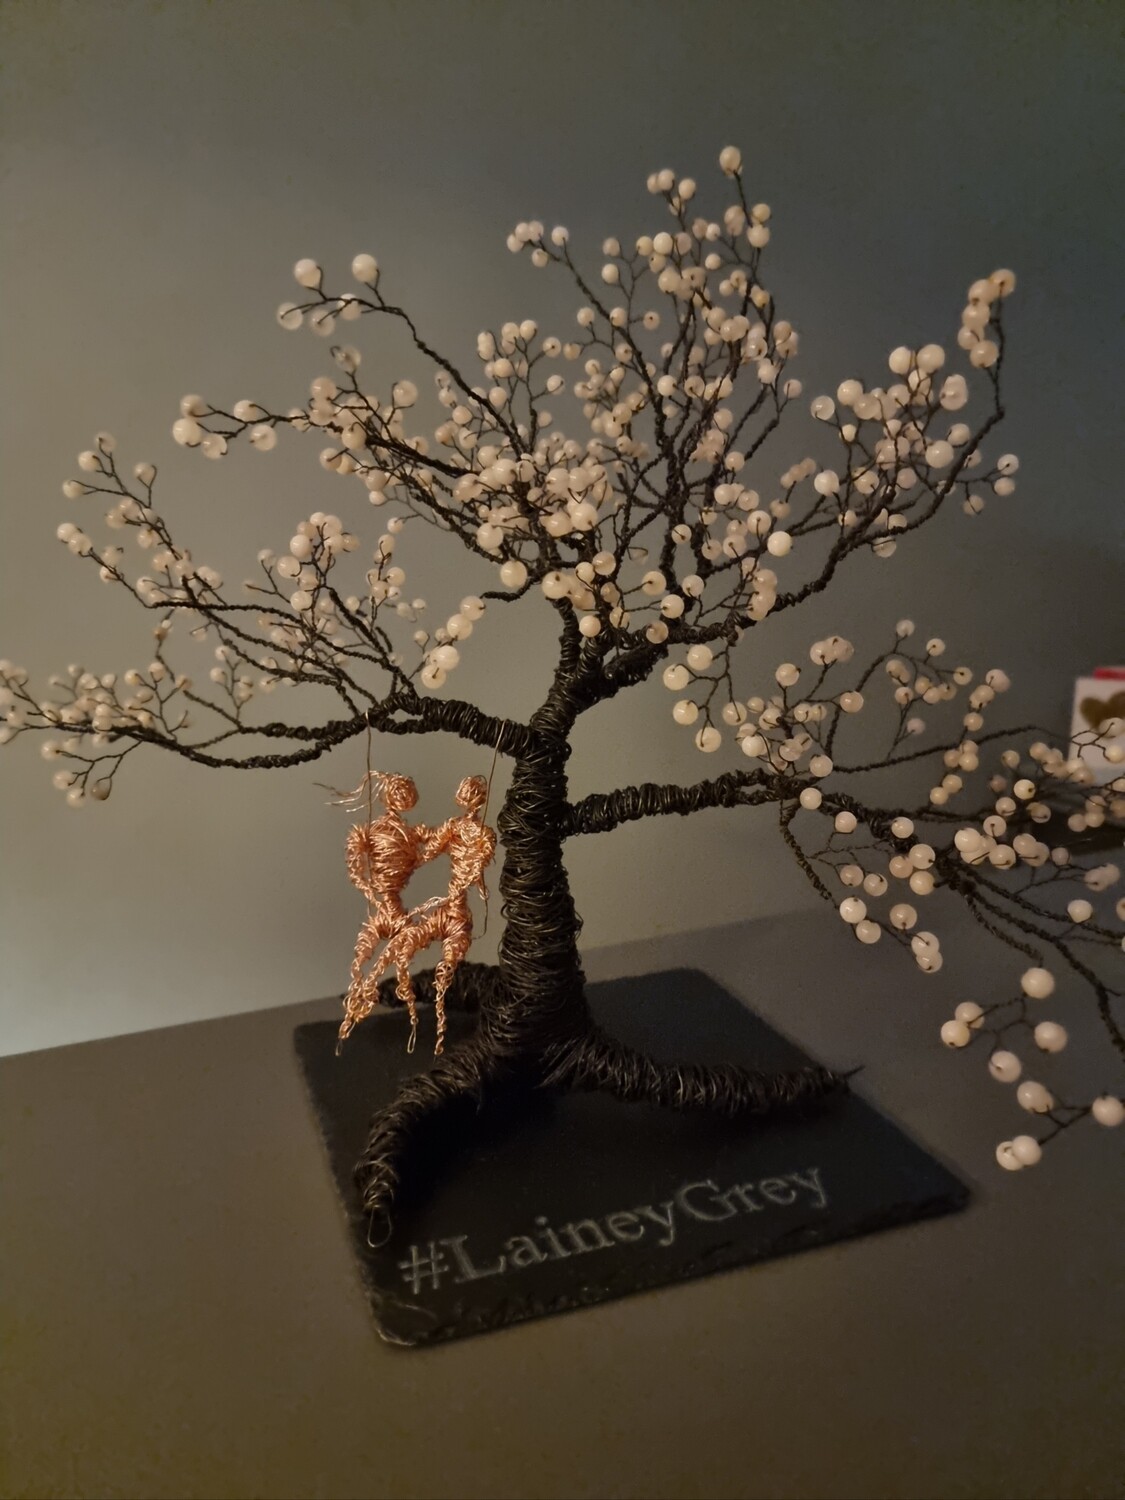 Black Iron wire "Lover's Tree" with Rose Quartz beads